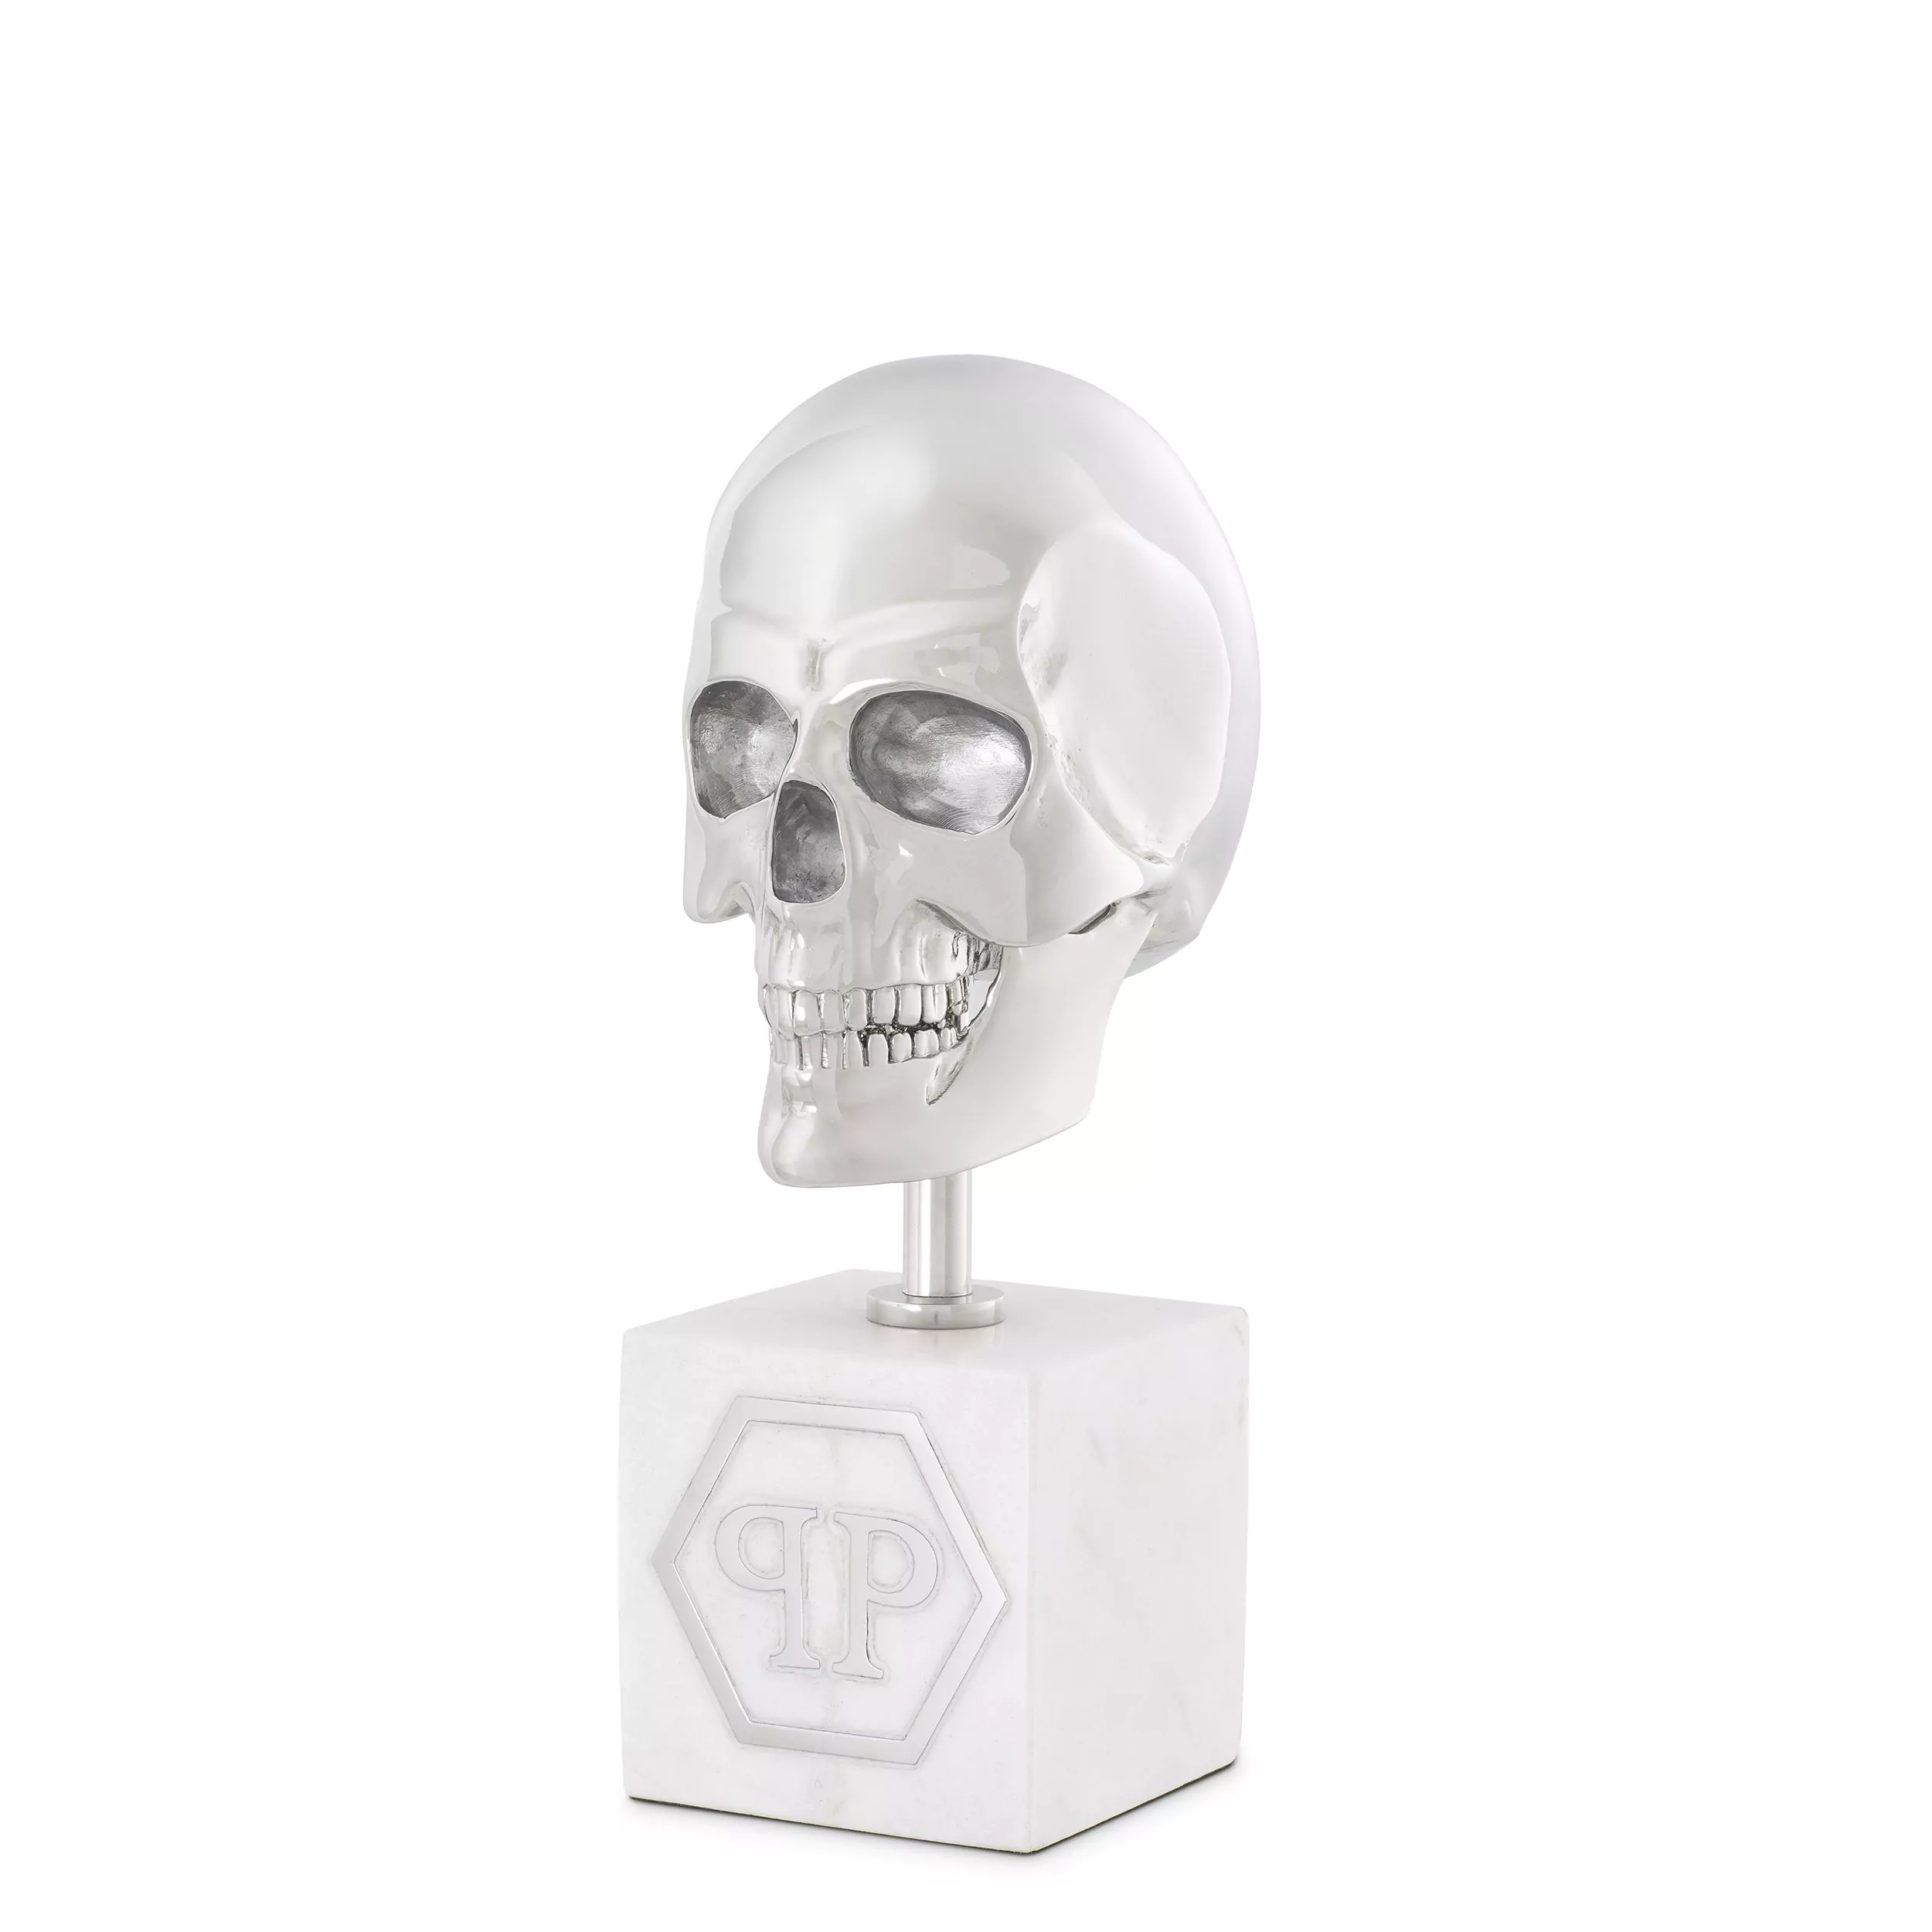 Dekorácia Platinum Skull S